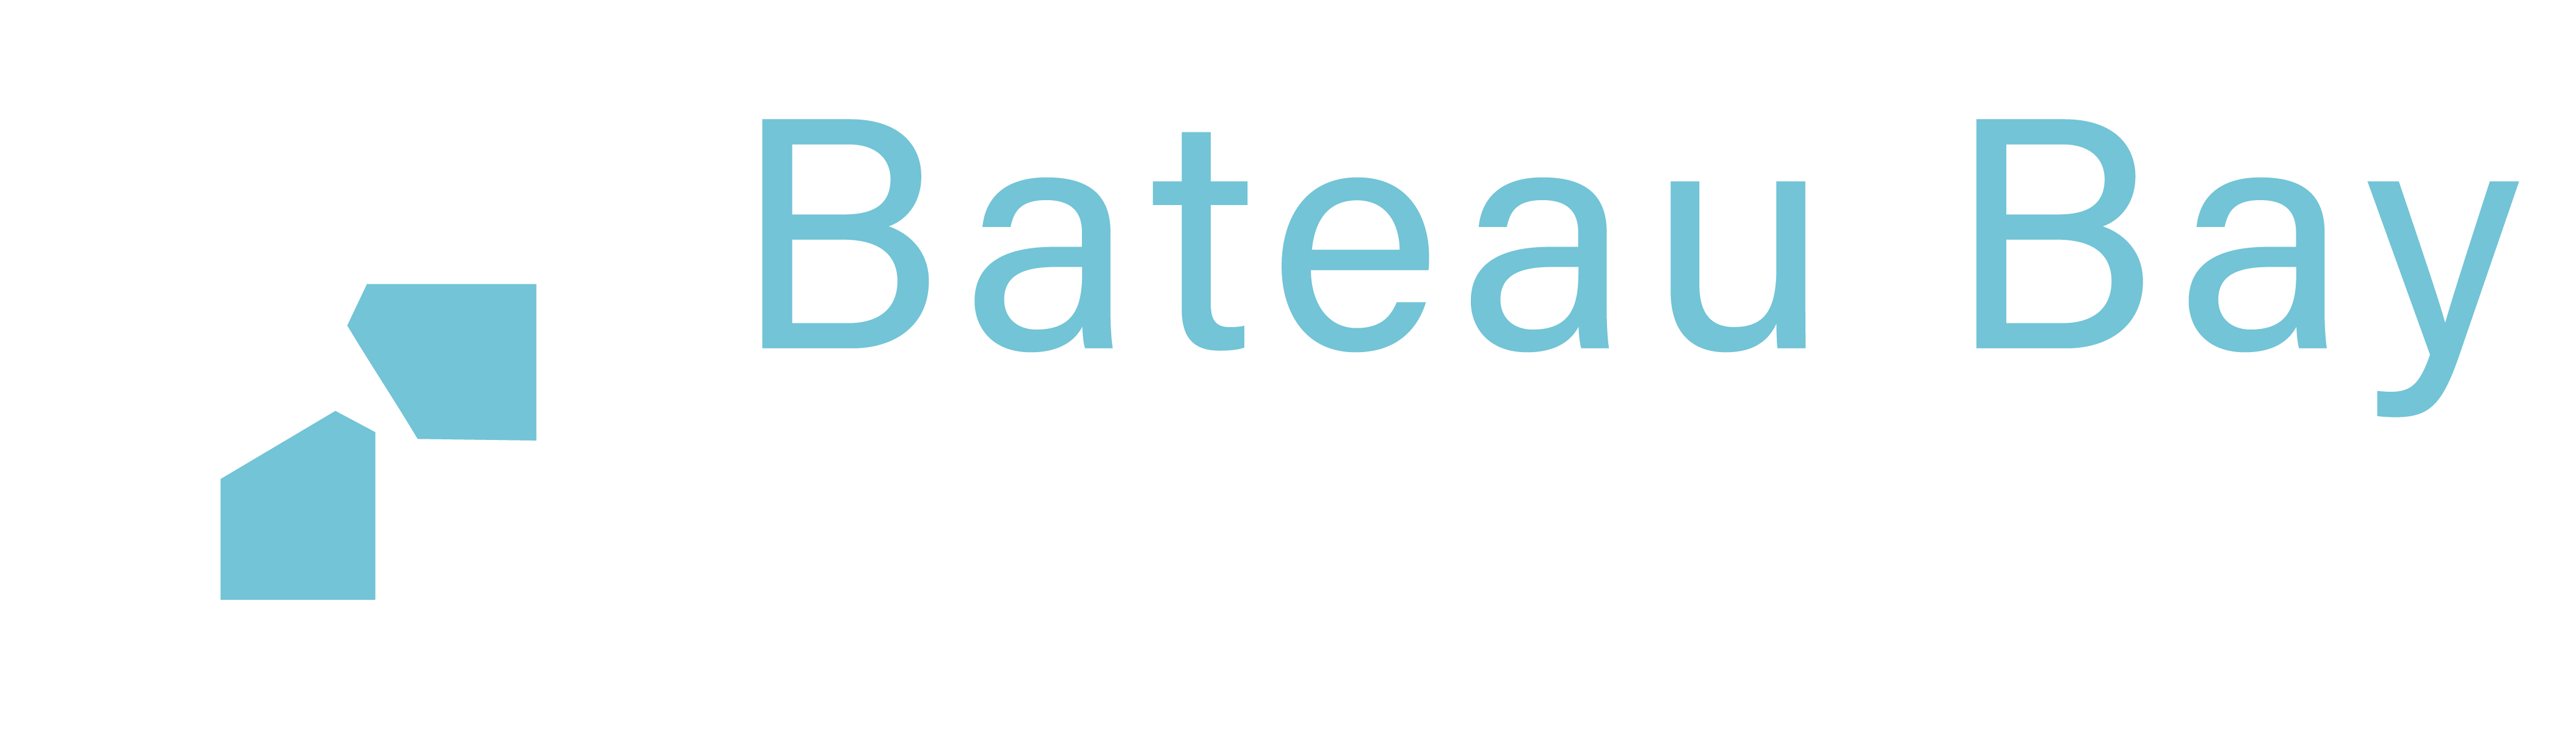 MF Bateau Bay Medical Centre Logo Long REV